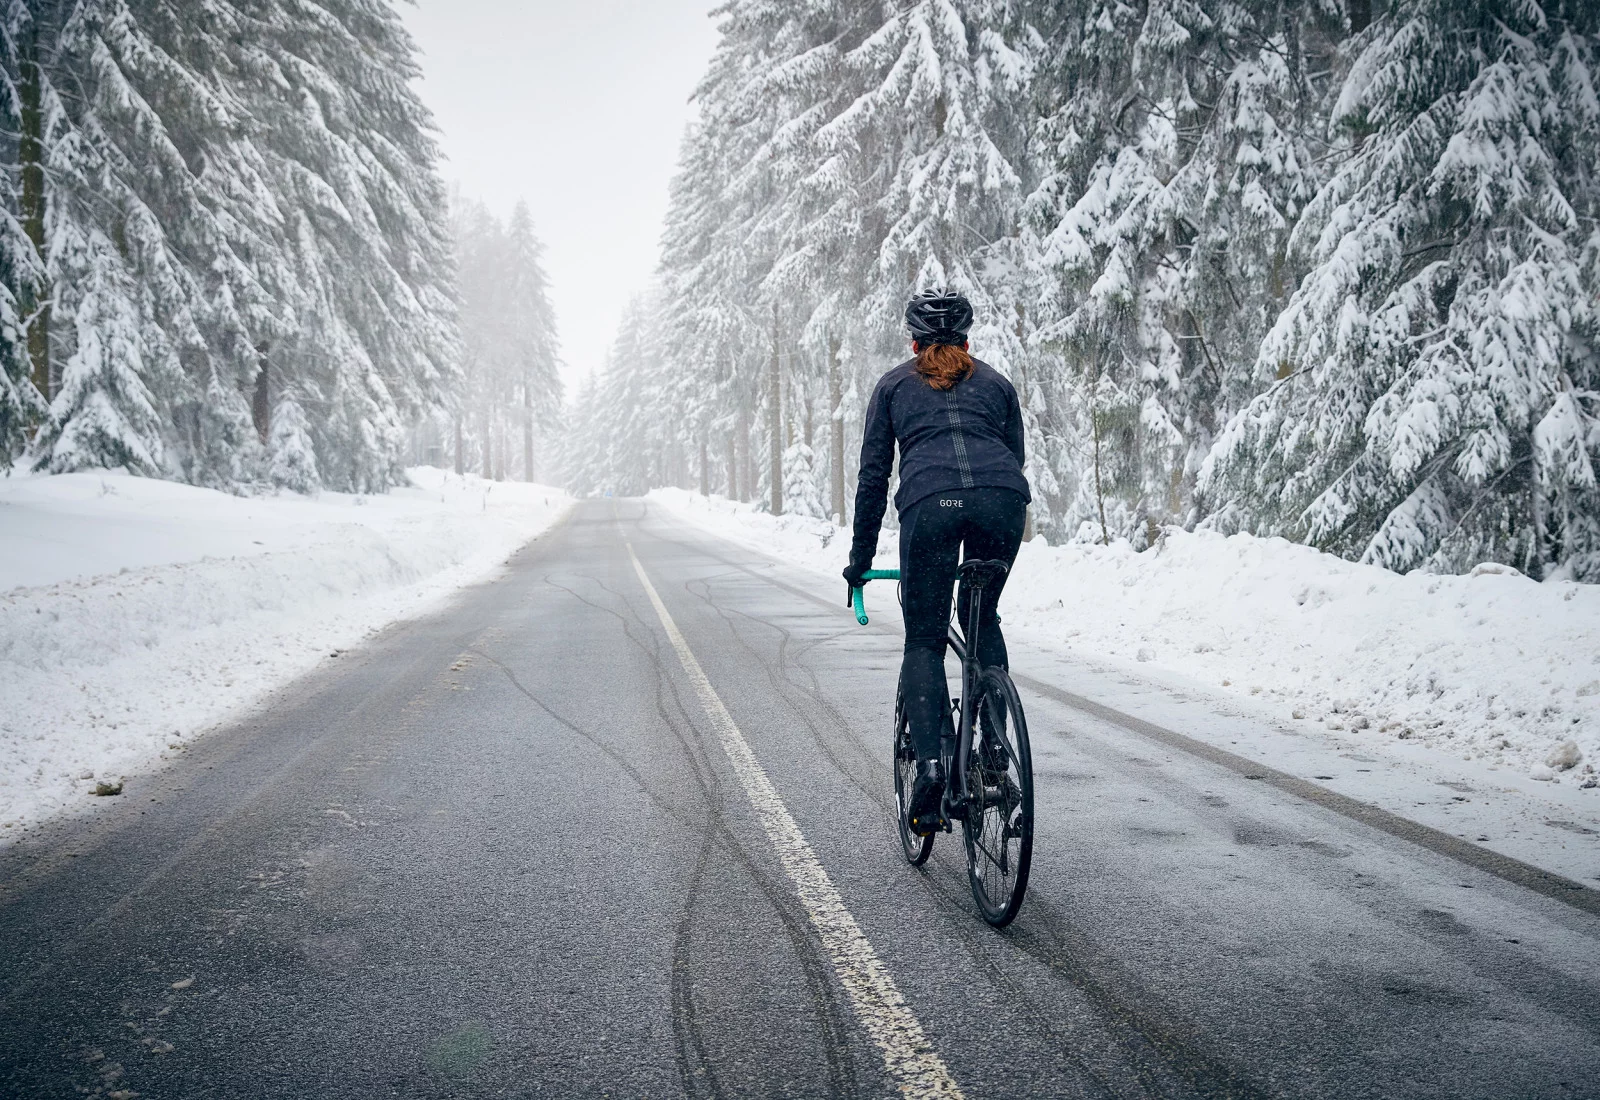 Winter Cycling 1 by Marc TRAUTMANN